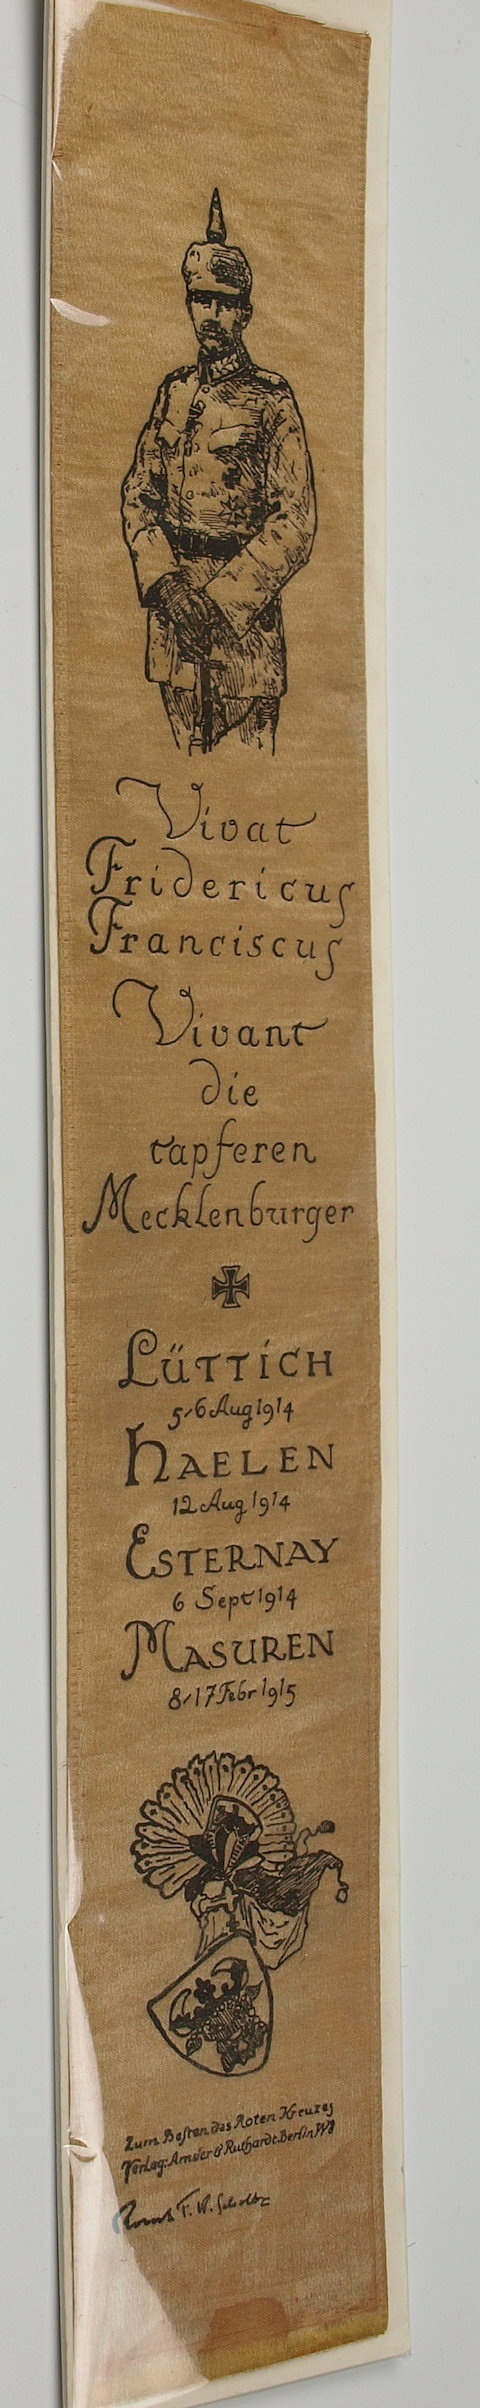 Vivat Fridericus Franciscus -  Vivant die tapferen Mecklenburger, 1. Weltkrieg (Museum Weißenfels - Schloss Neu-Augustusburg CC BY-NC-SA)